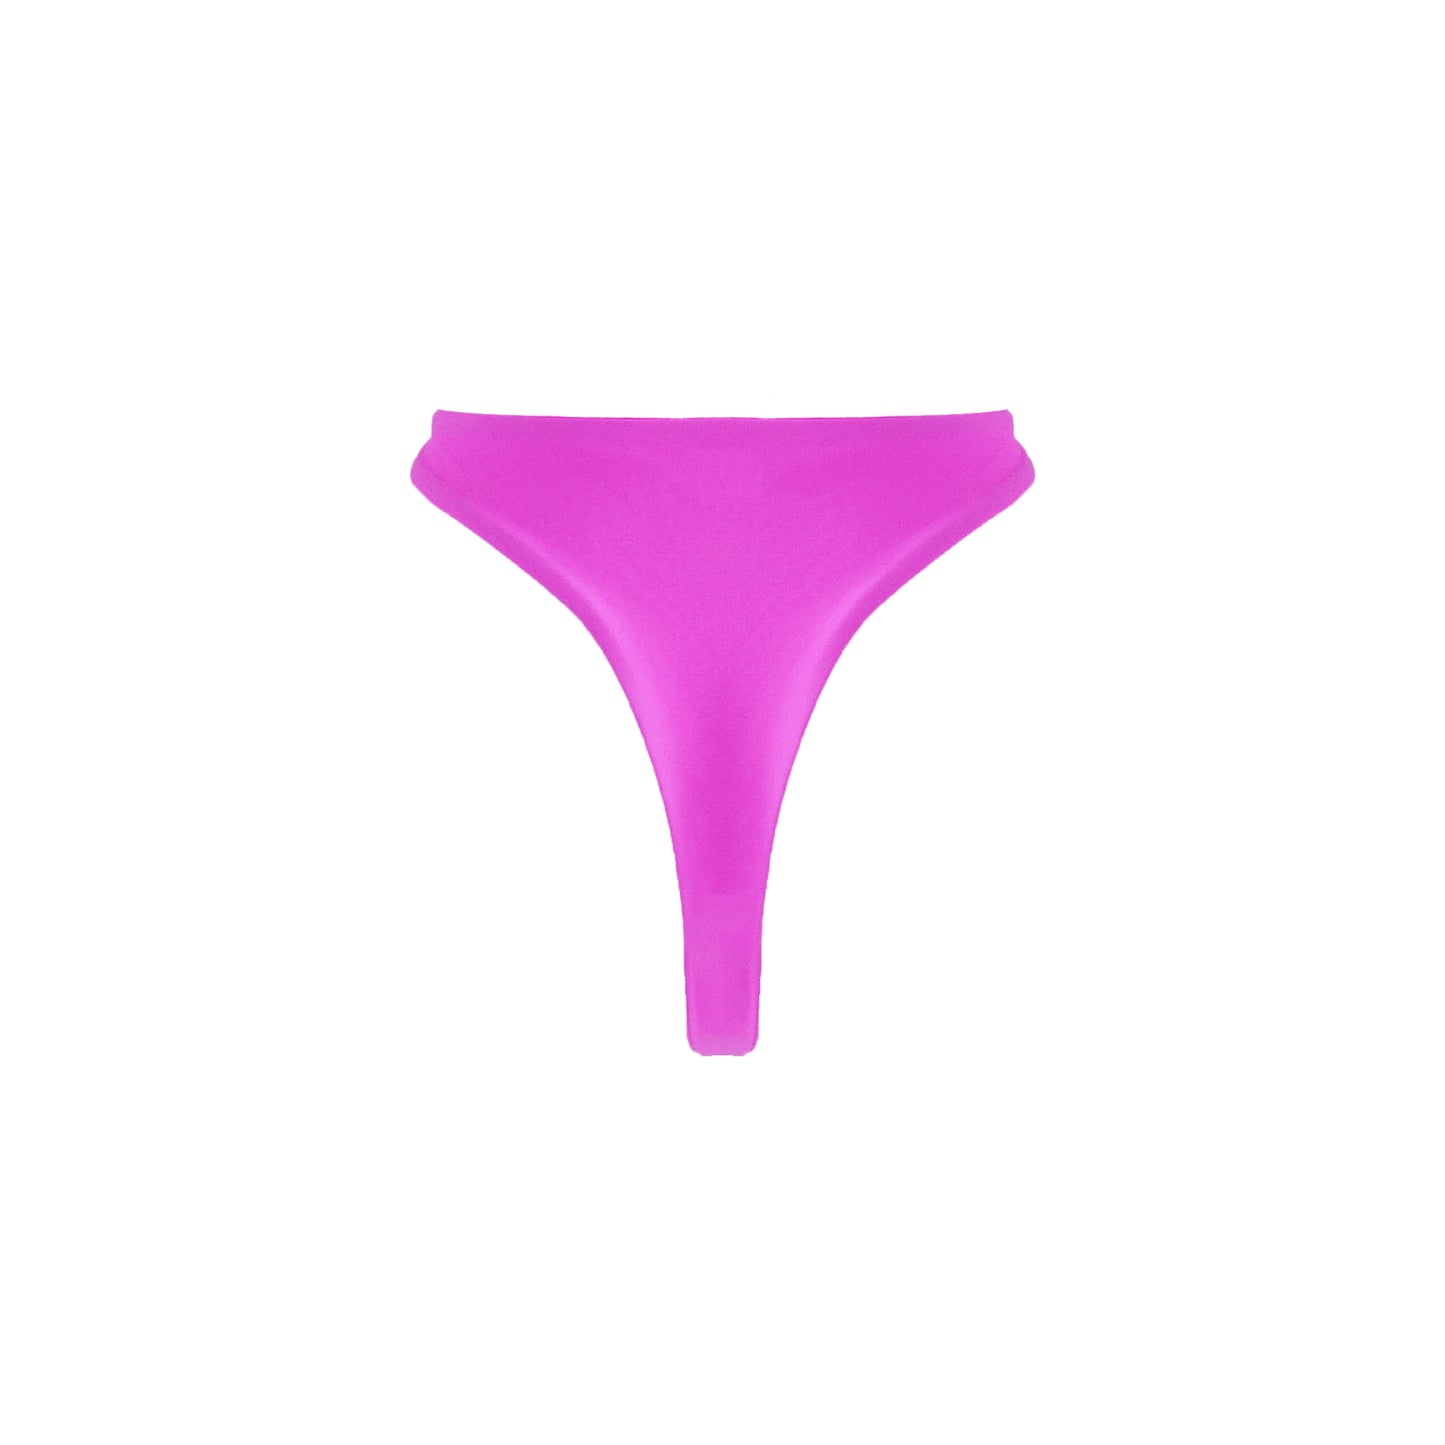 Back view of bright pink high waist thong bikini bottom with high cut legs.